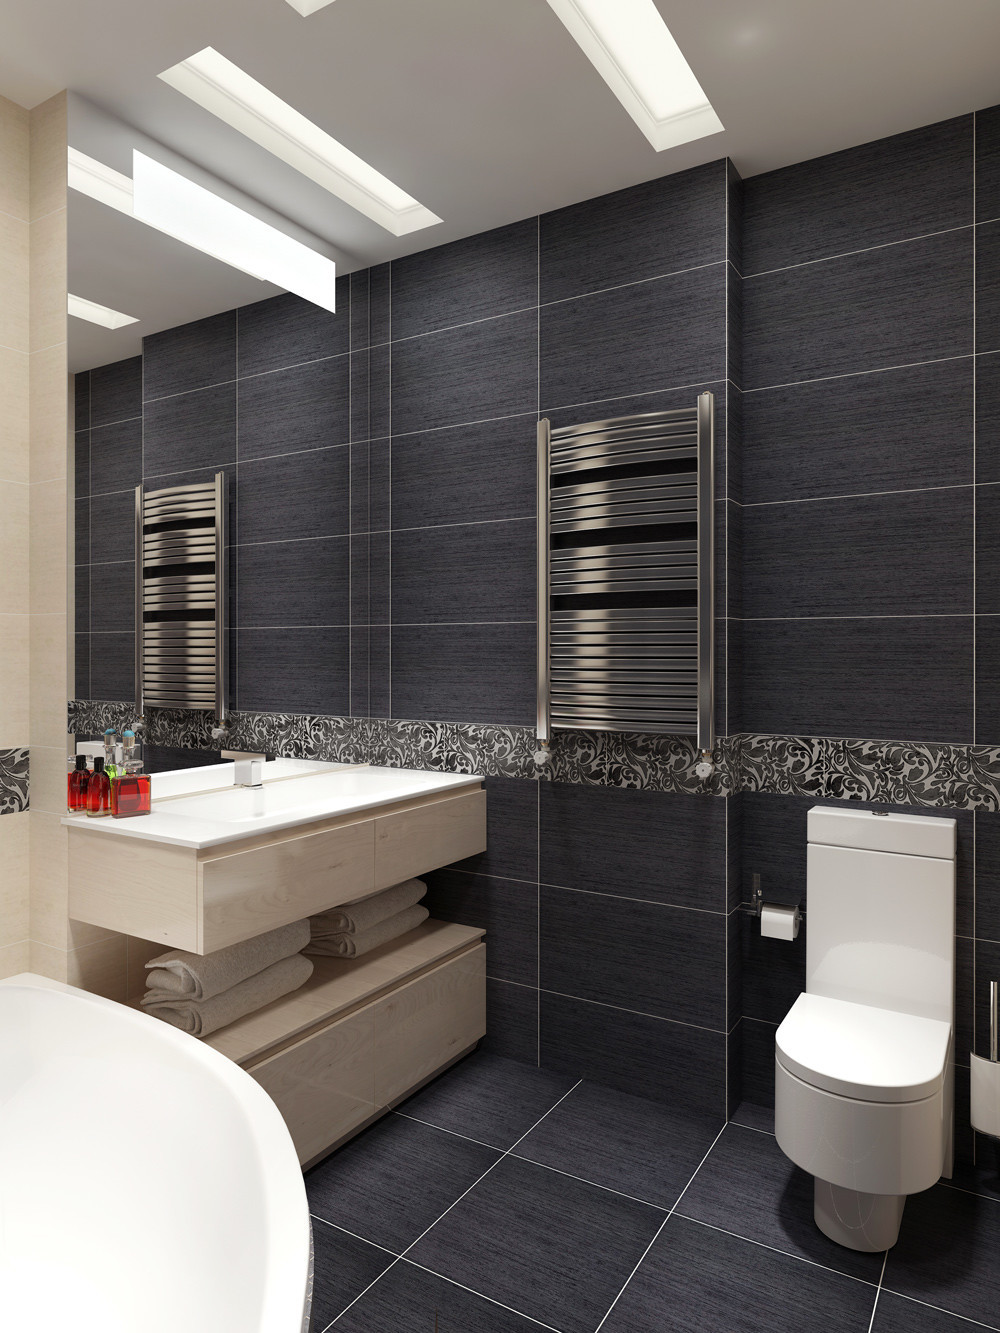 Lowe'S Bathroom Tile
 Top 10 Inspiring Bathroom Tile Trends for 2019